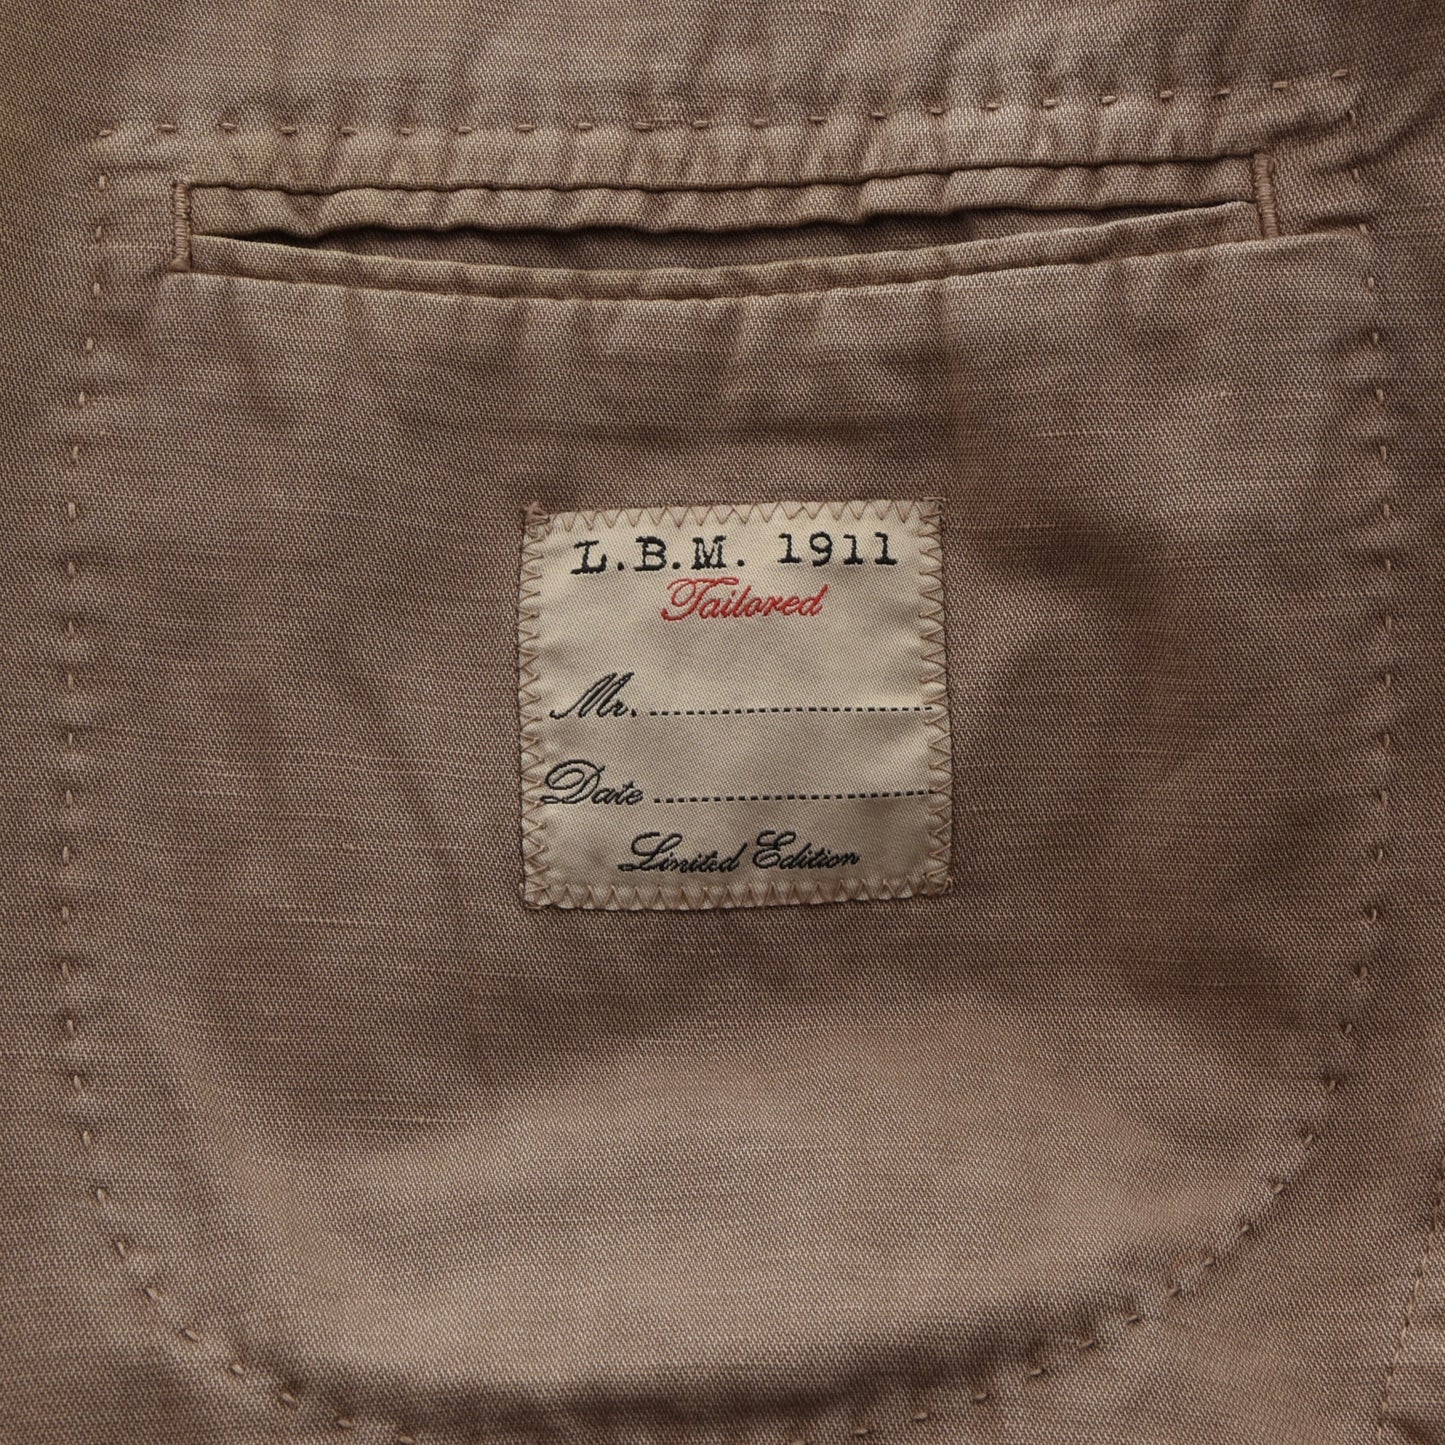 LBM 1911 Baumwoll-Leinen-Jacke Größe 50 - Sand/Tan-Grau